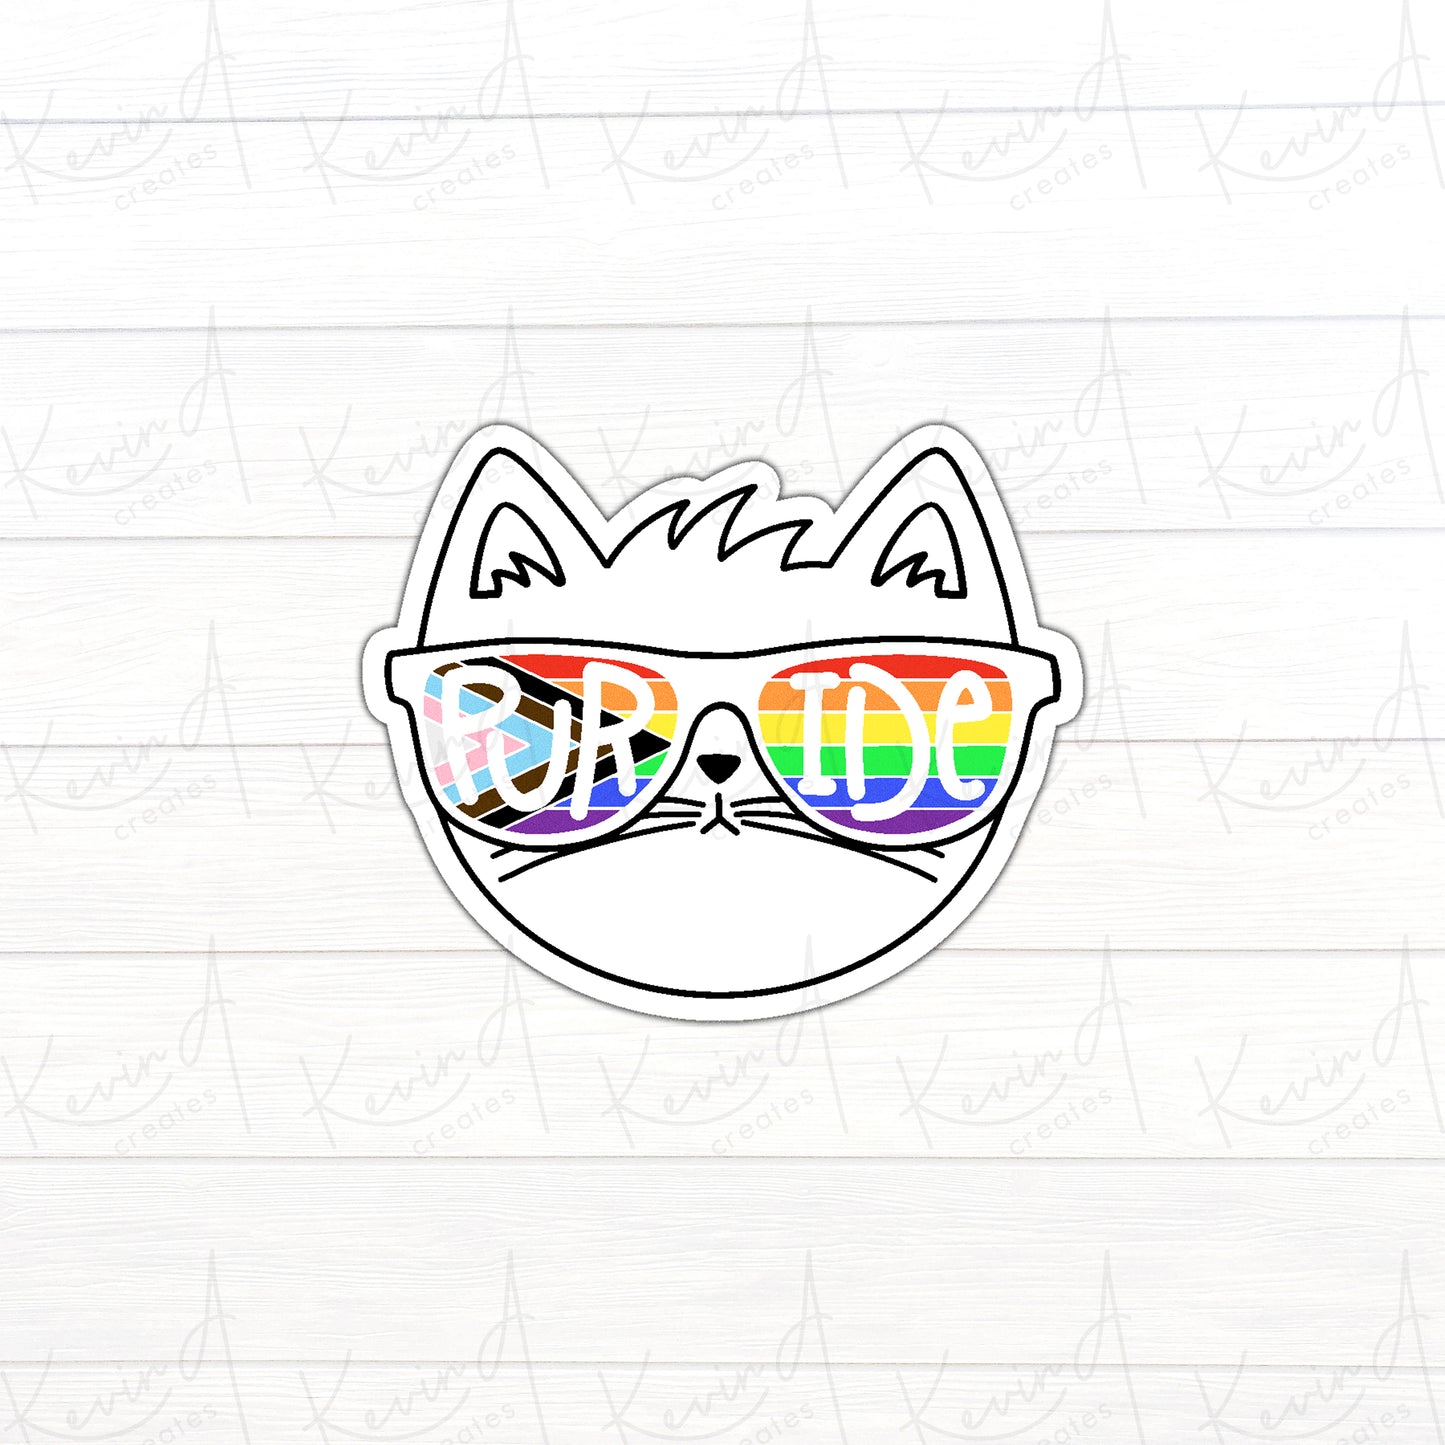 DC-023, "Pur-ide" Cool Cat Pride Die Cut Stickers